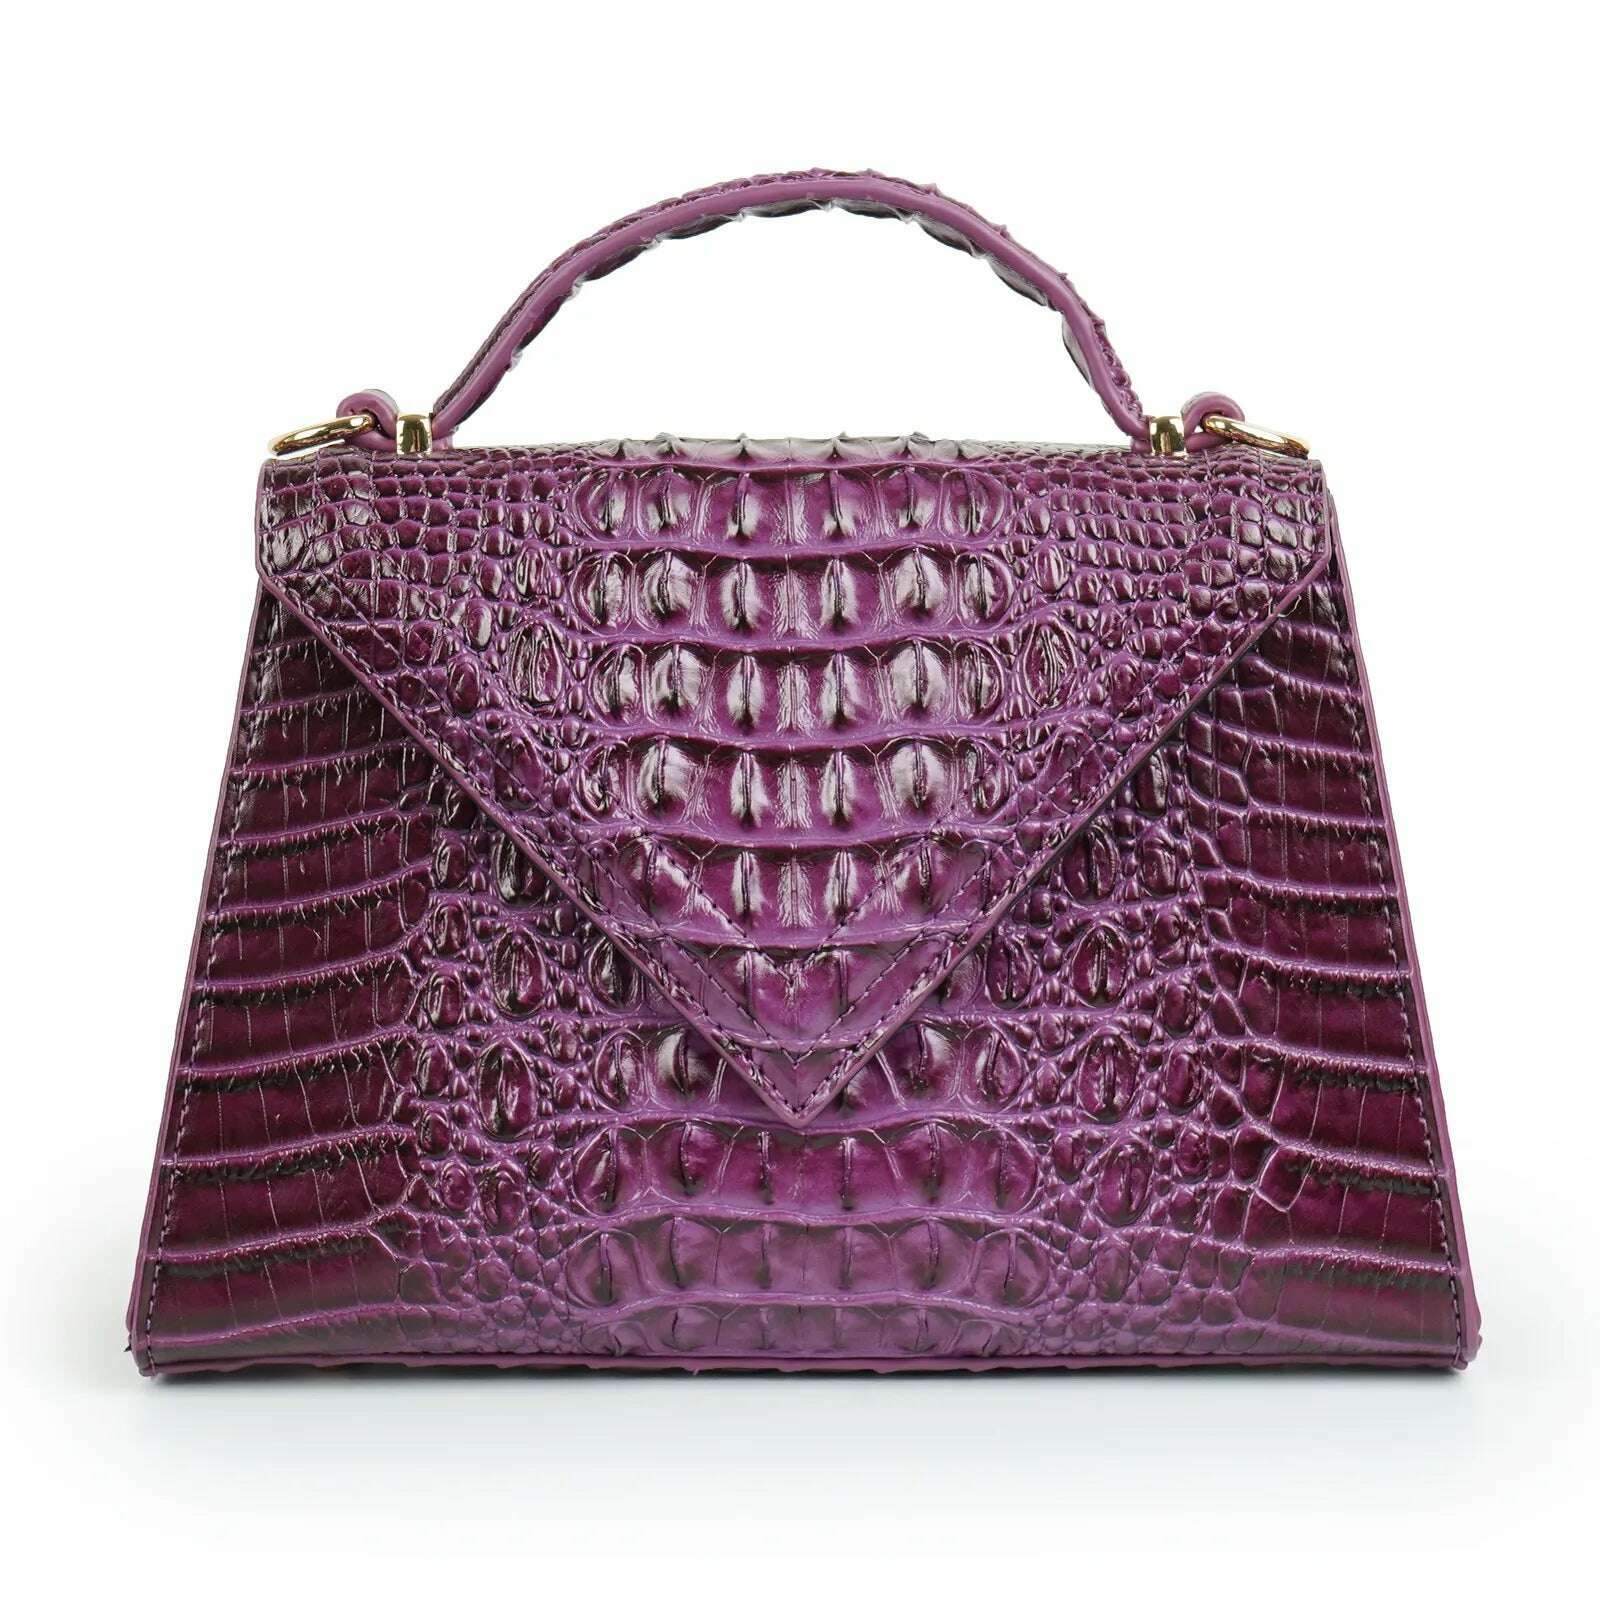 KIMLUD, Luxury Designer Handbag Brand Crossbody Bags for Women 2022 New Crocodile Pattern Leather Shoulder Bags Casual Tote Bag, KIMLUD Women's Clothes